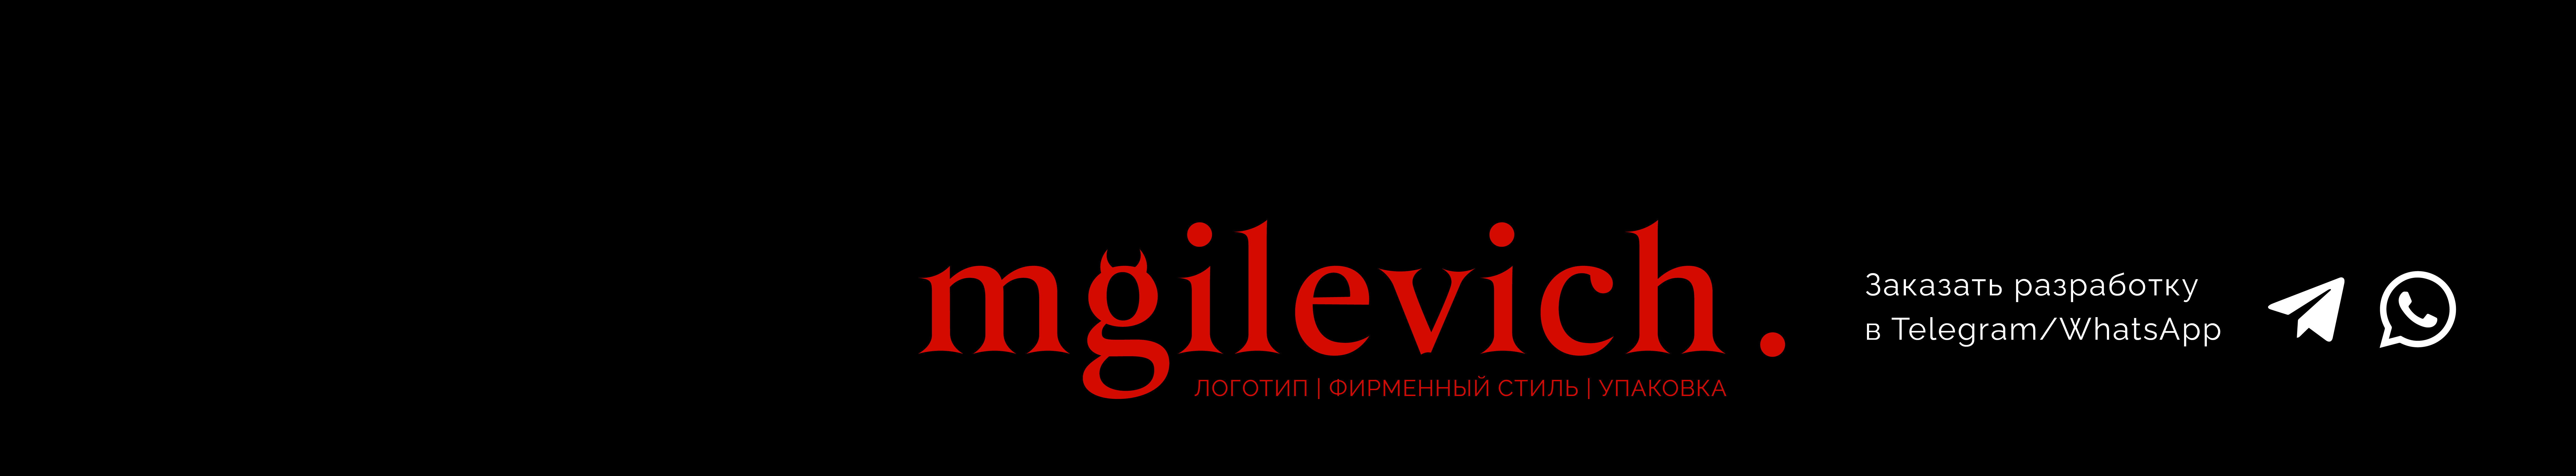 Мария Гилевич's profile banner